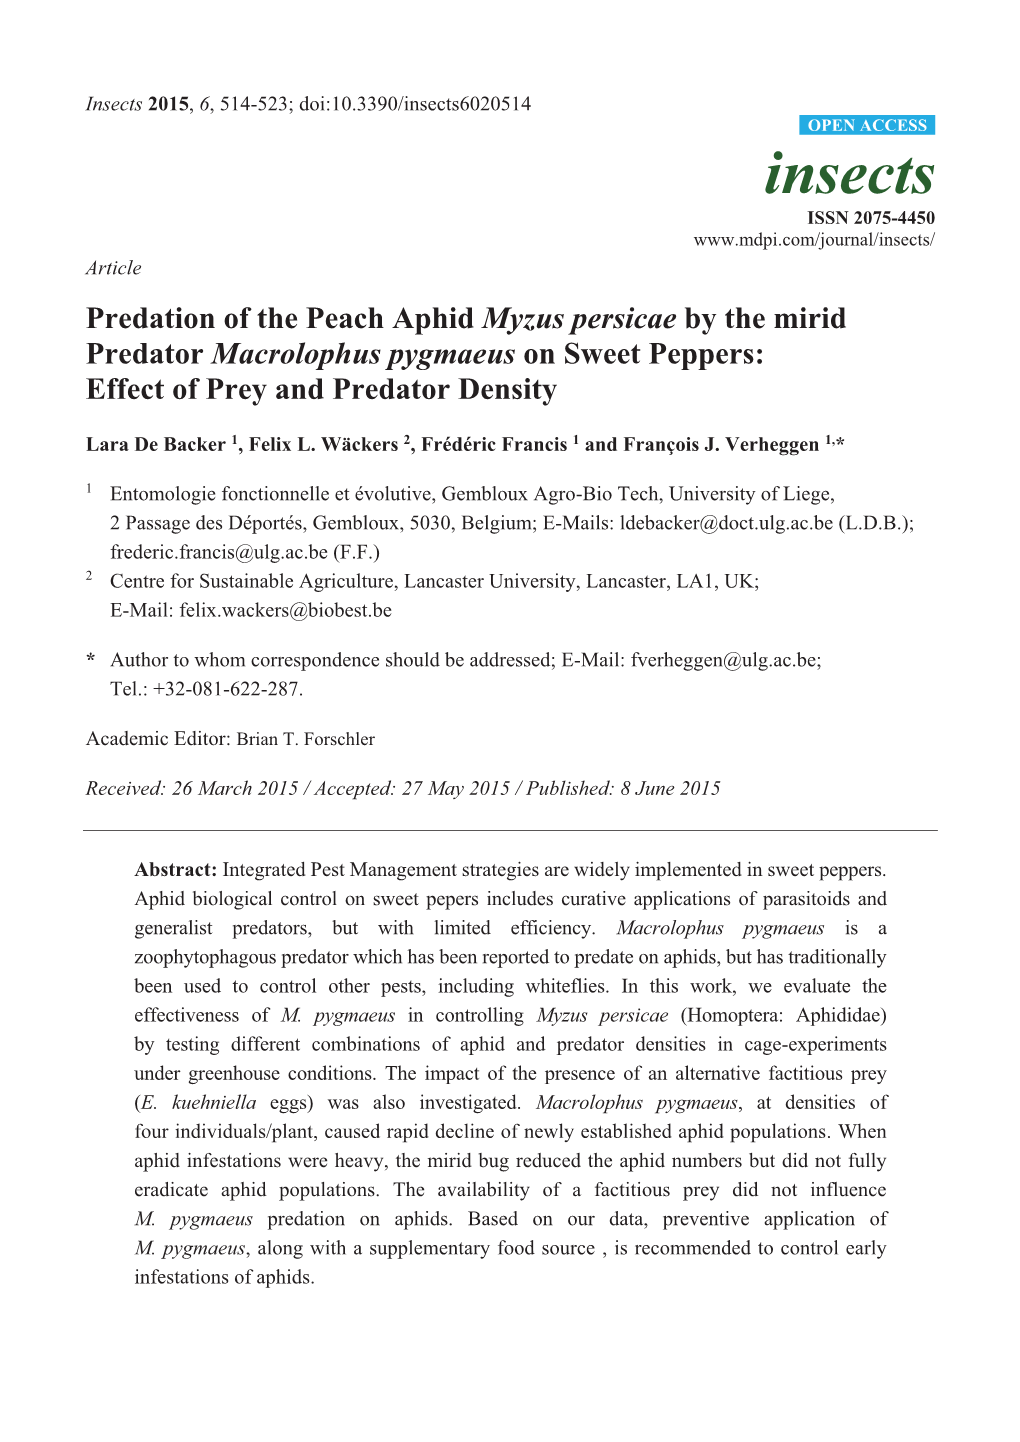 Predation of the Peach Aphid Myzus Persicae by the Mirid Predator Macrolophus Pygmaeus on Sweet Peppers: Effect of Prey and Predator Density